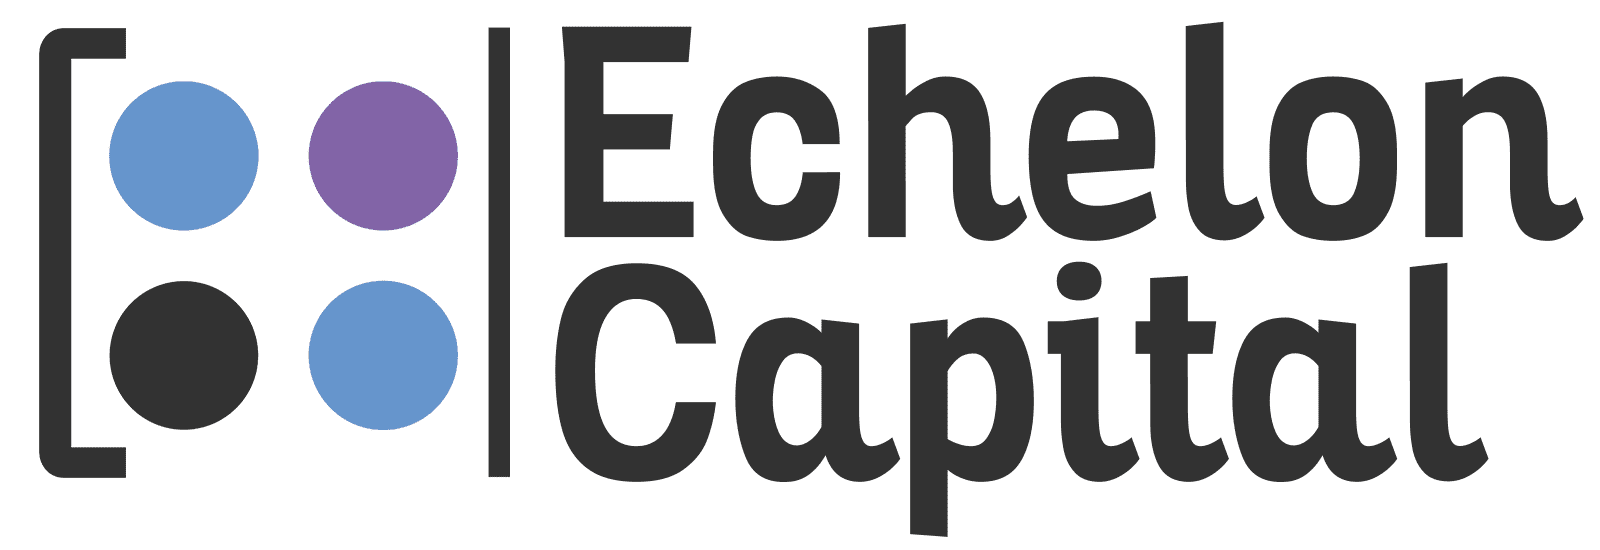 Echelon Capital